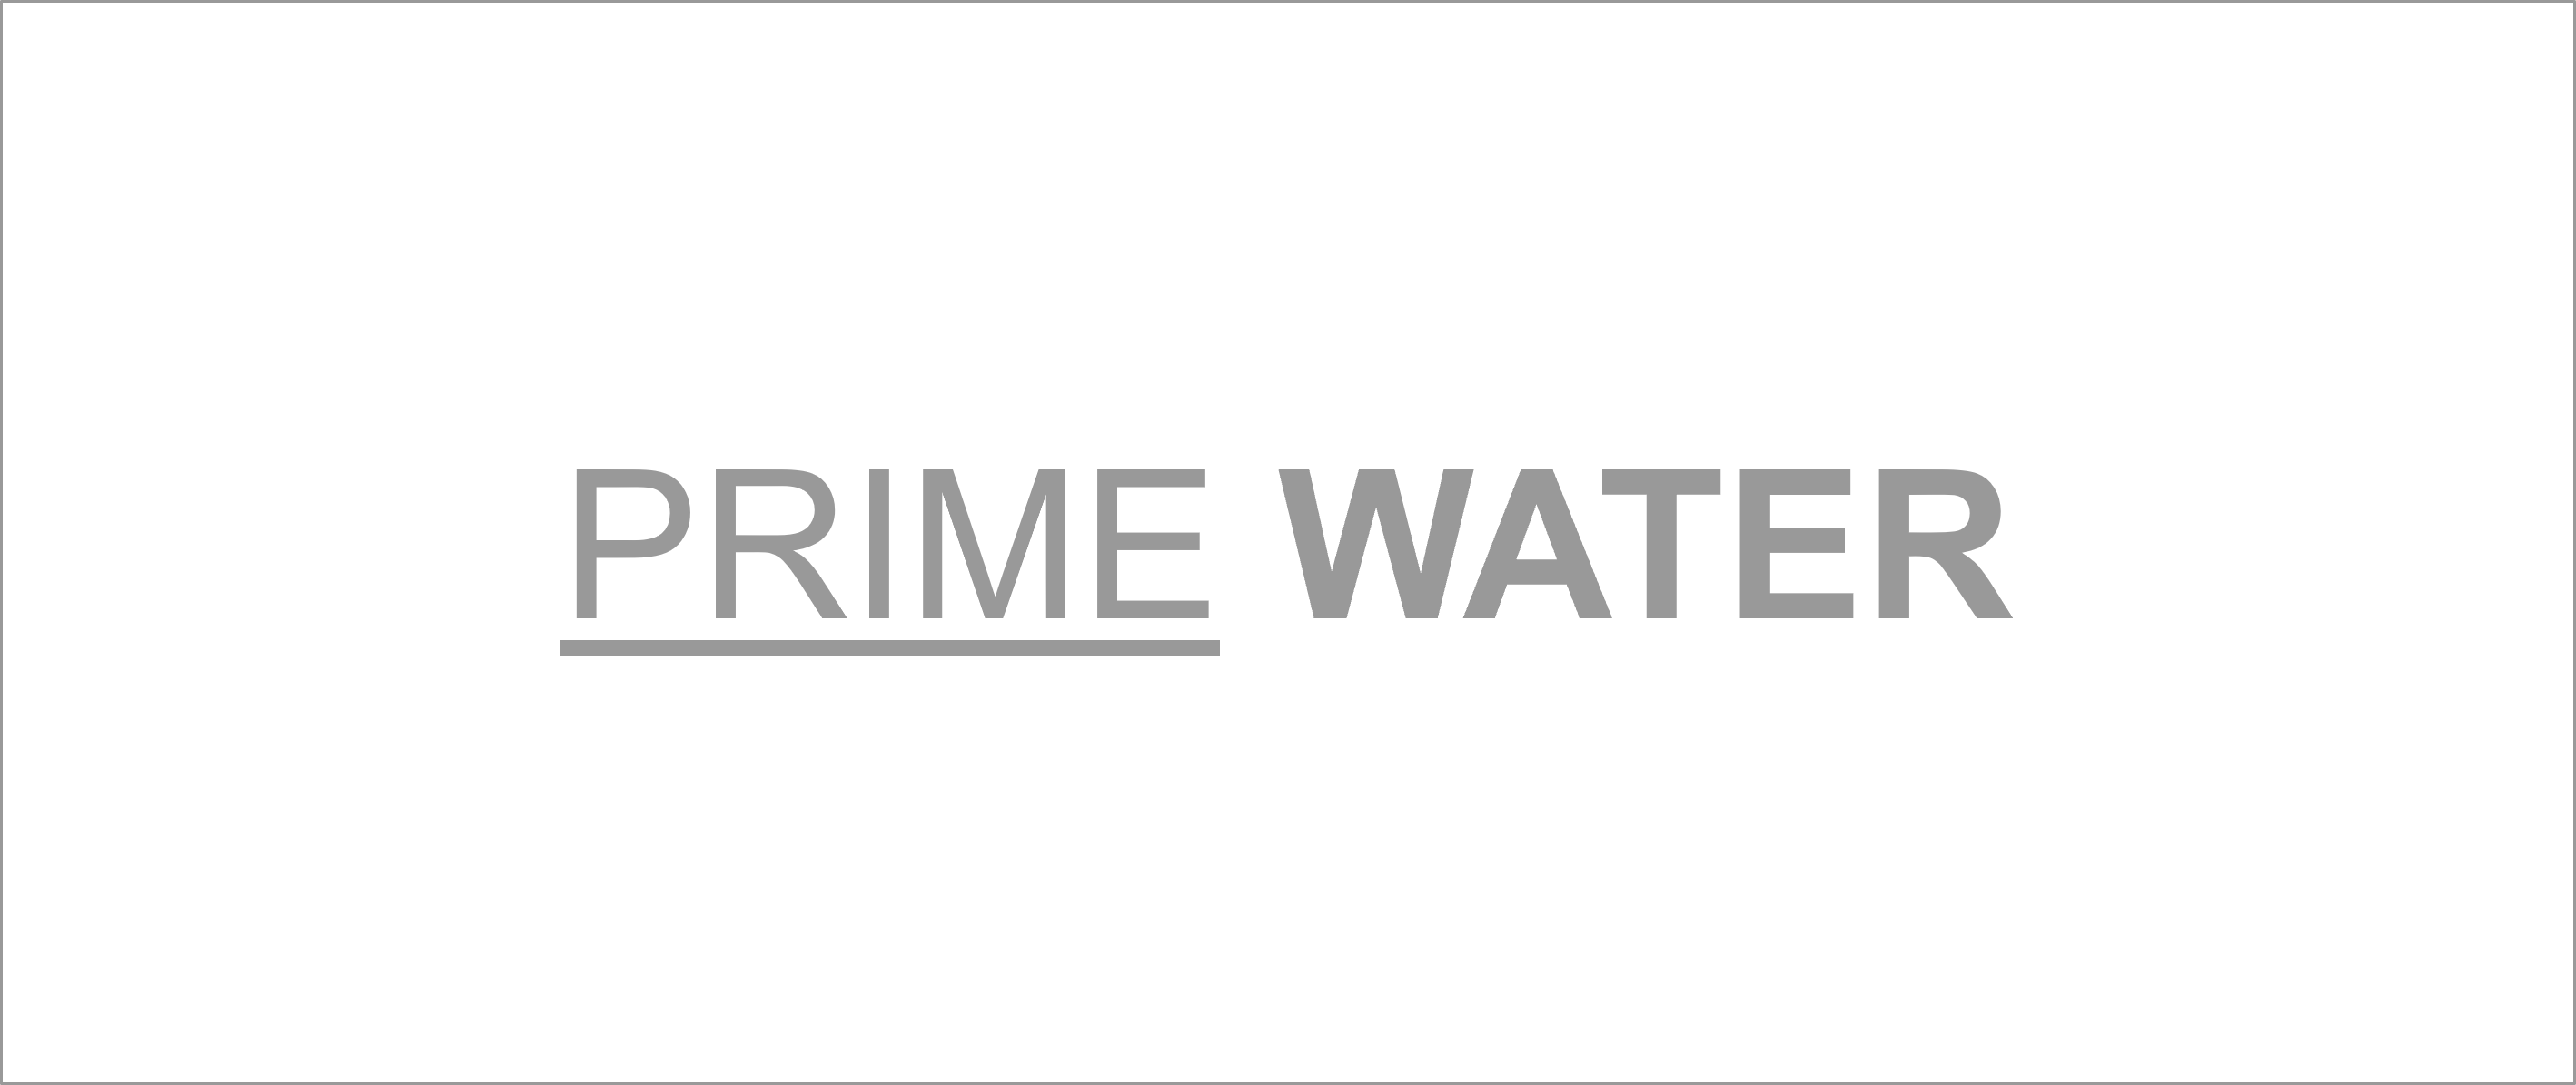 Prime Water